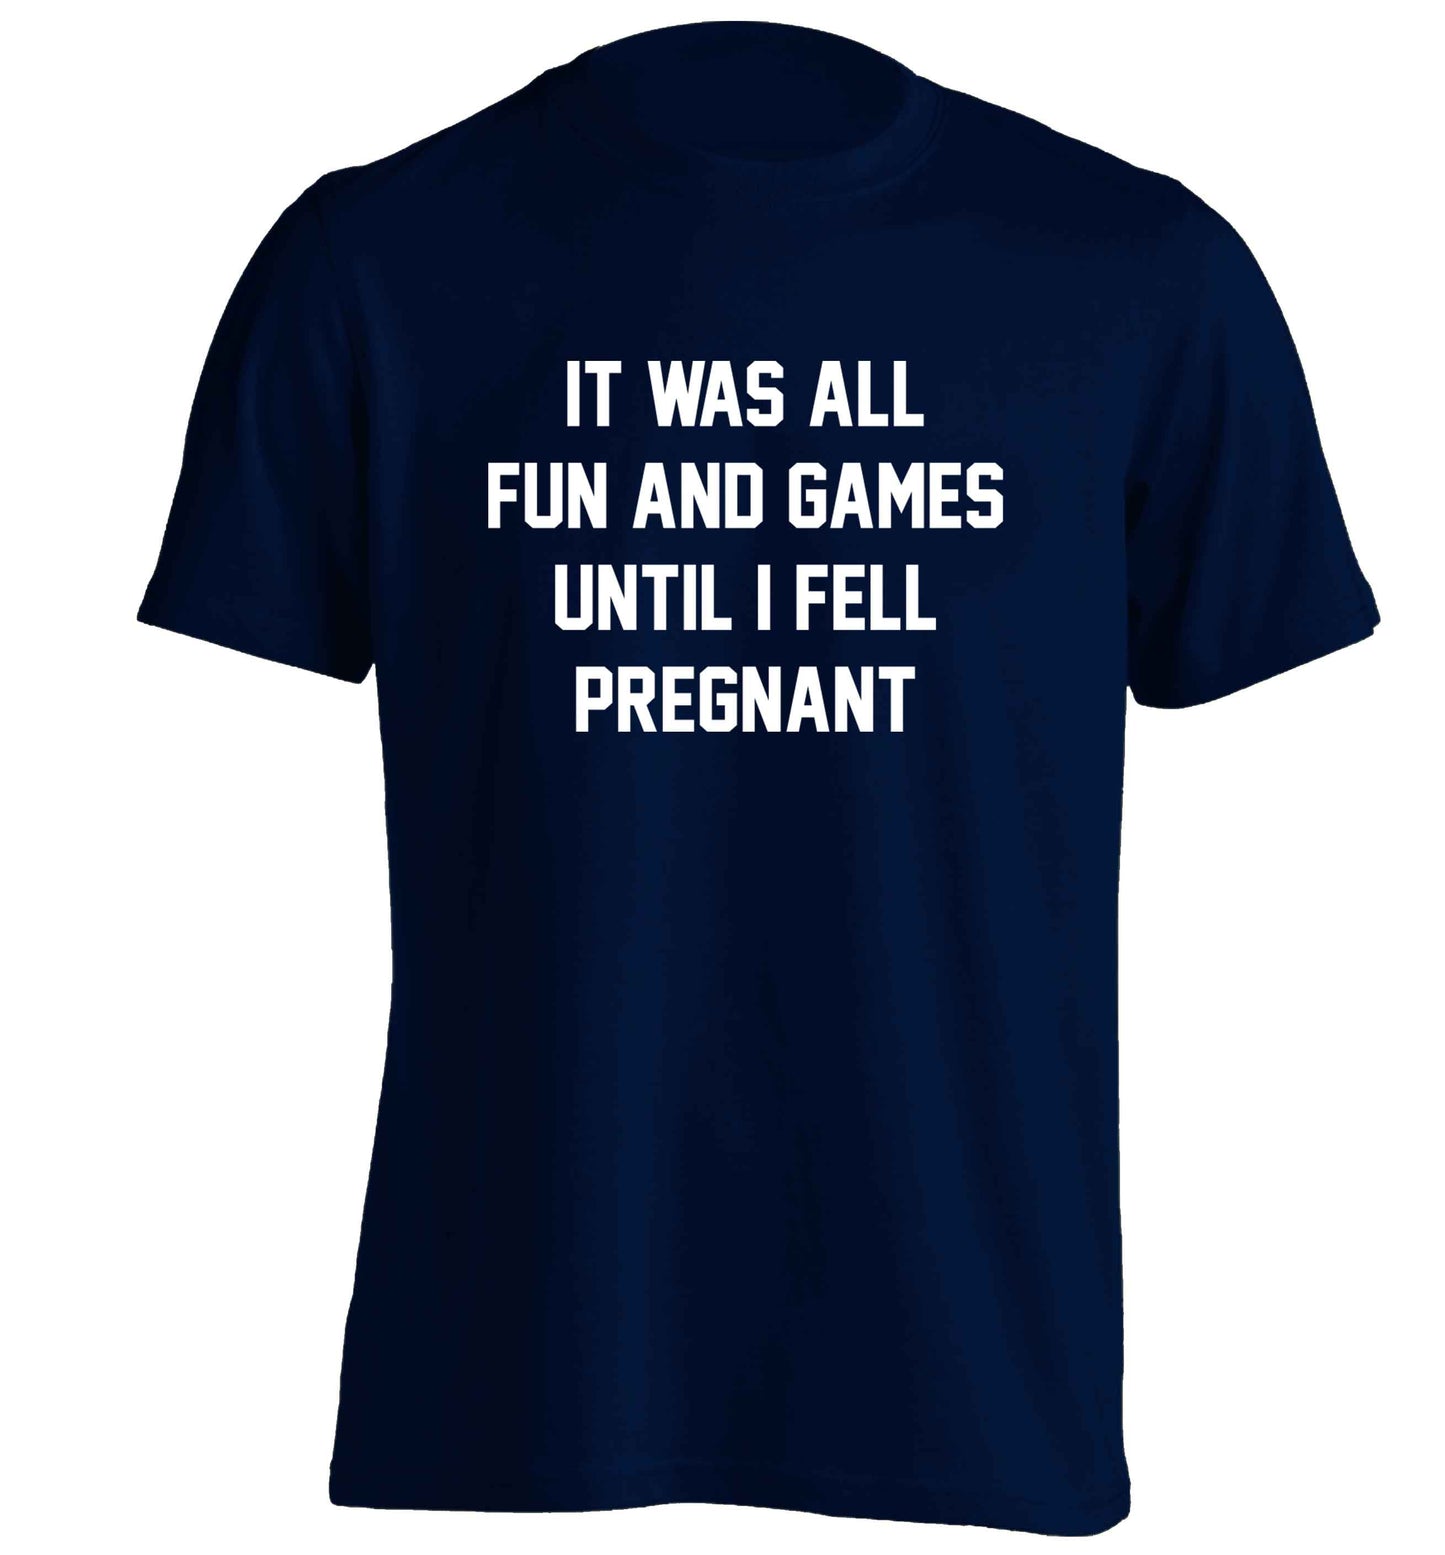 It was all fun and games until I fell pregnant kicks adults unisex navy Tshirt 2XL